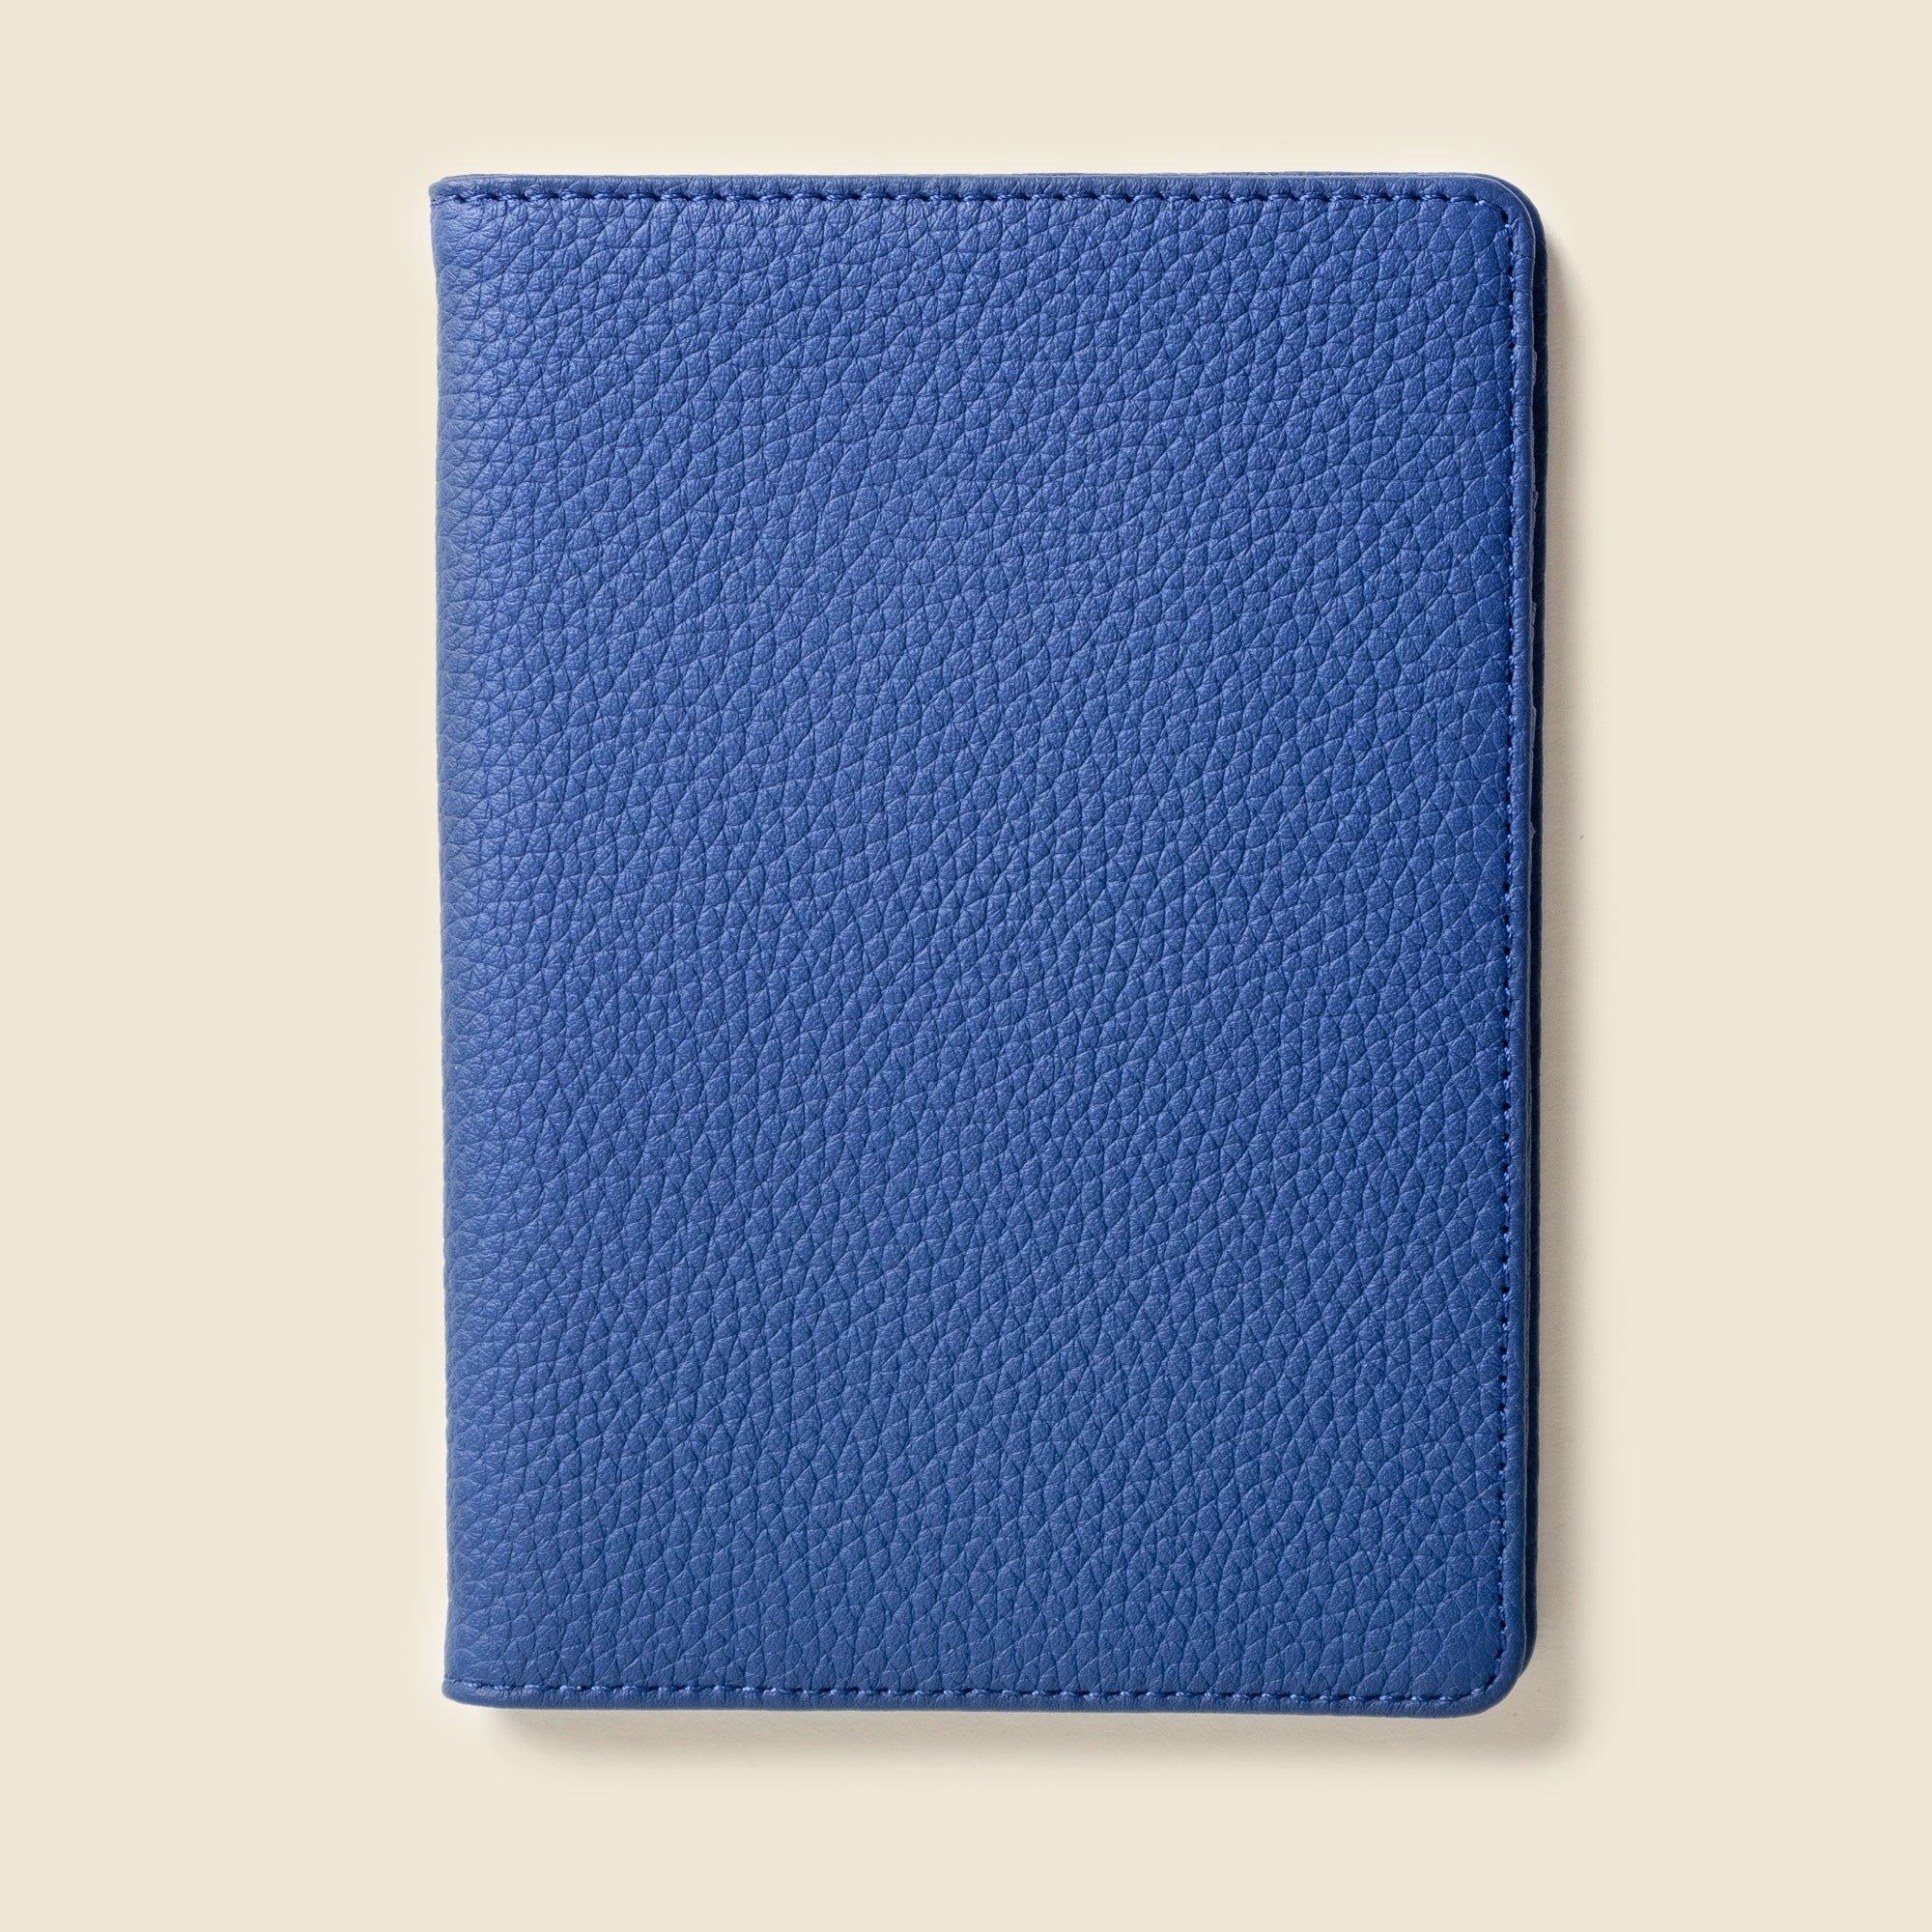 Cobalt blue leather passport Wallet with RFID